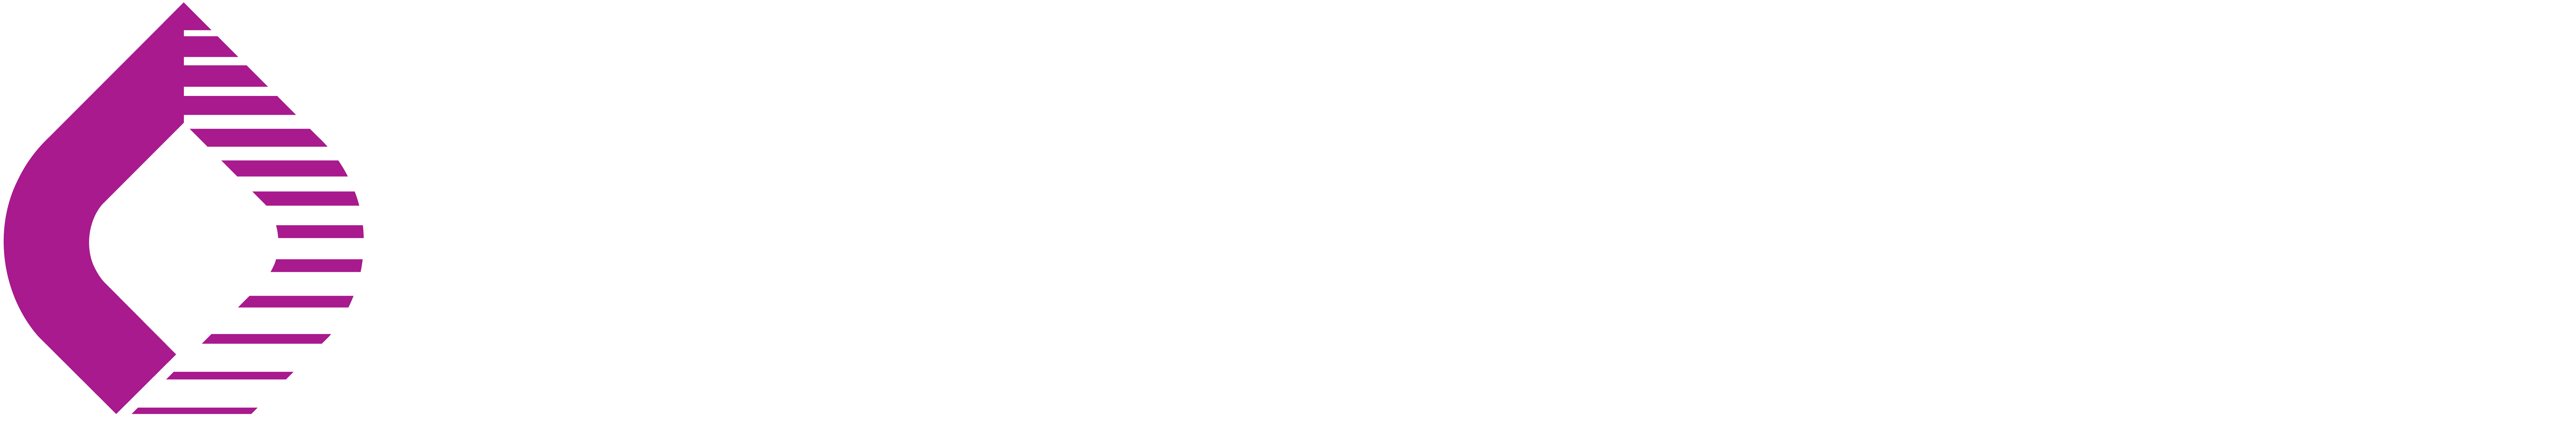 Candela — Logo